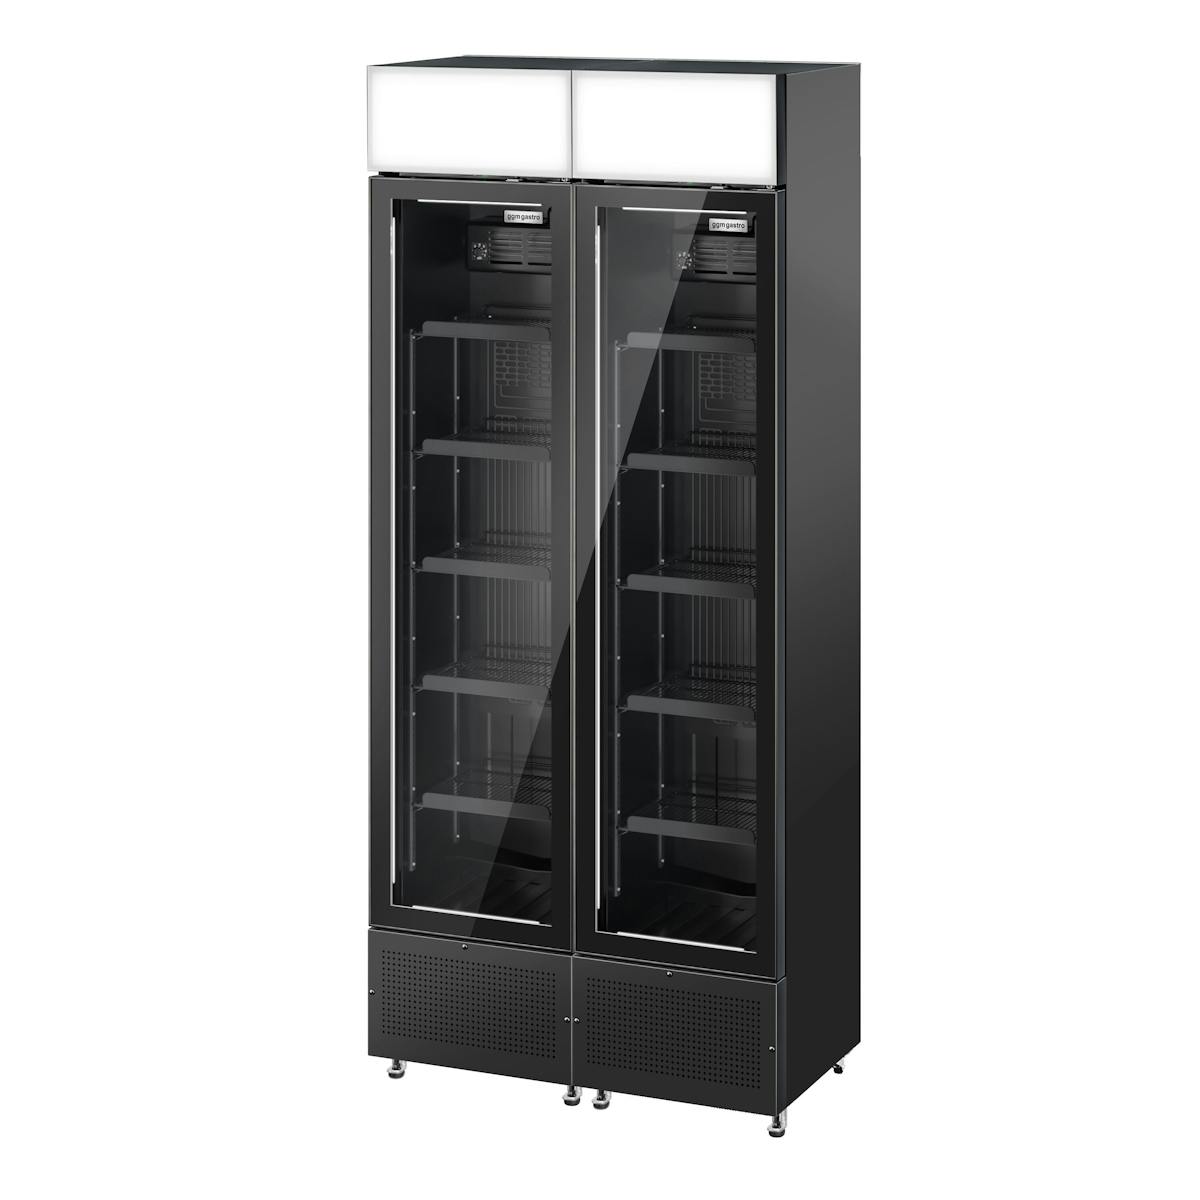 (2 units) Beverage refrigerator - 290 litres - frameless design - with advertising display